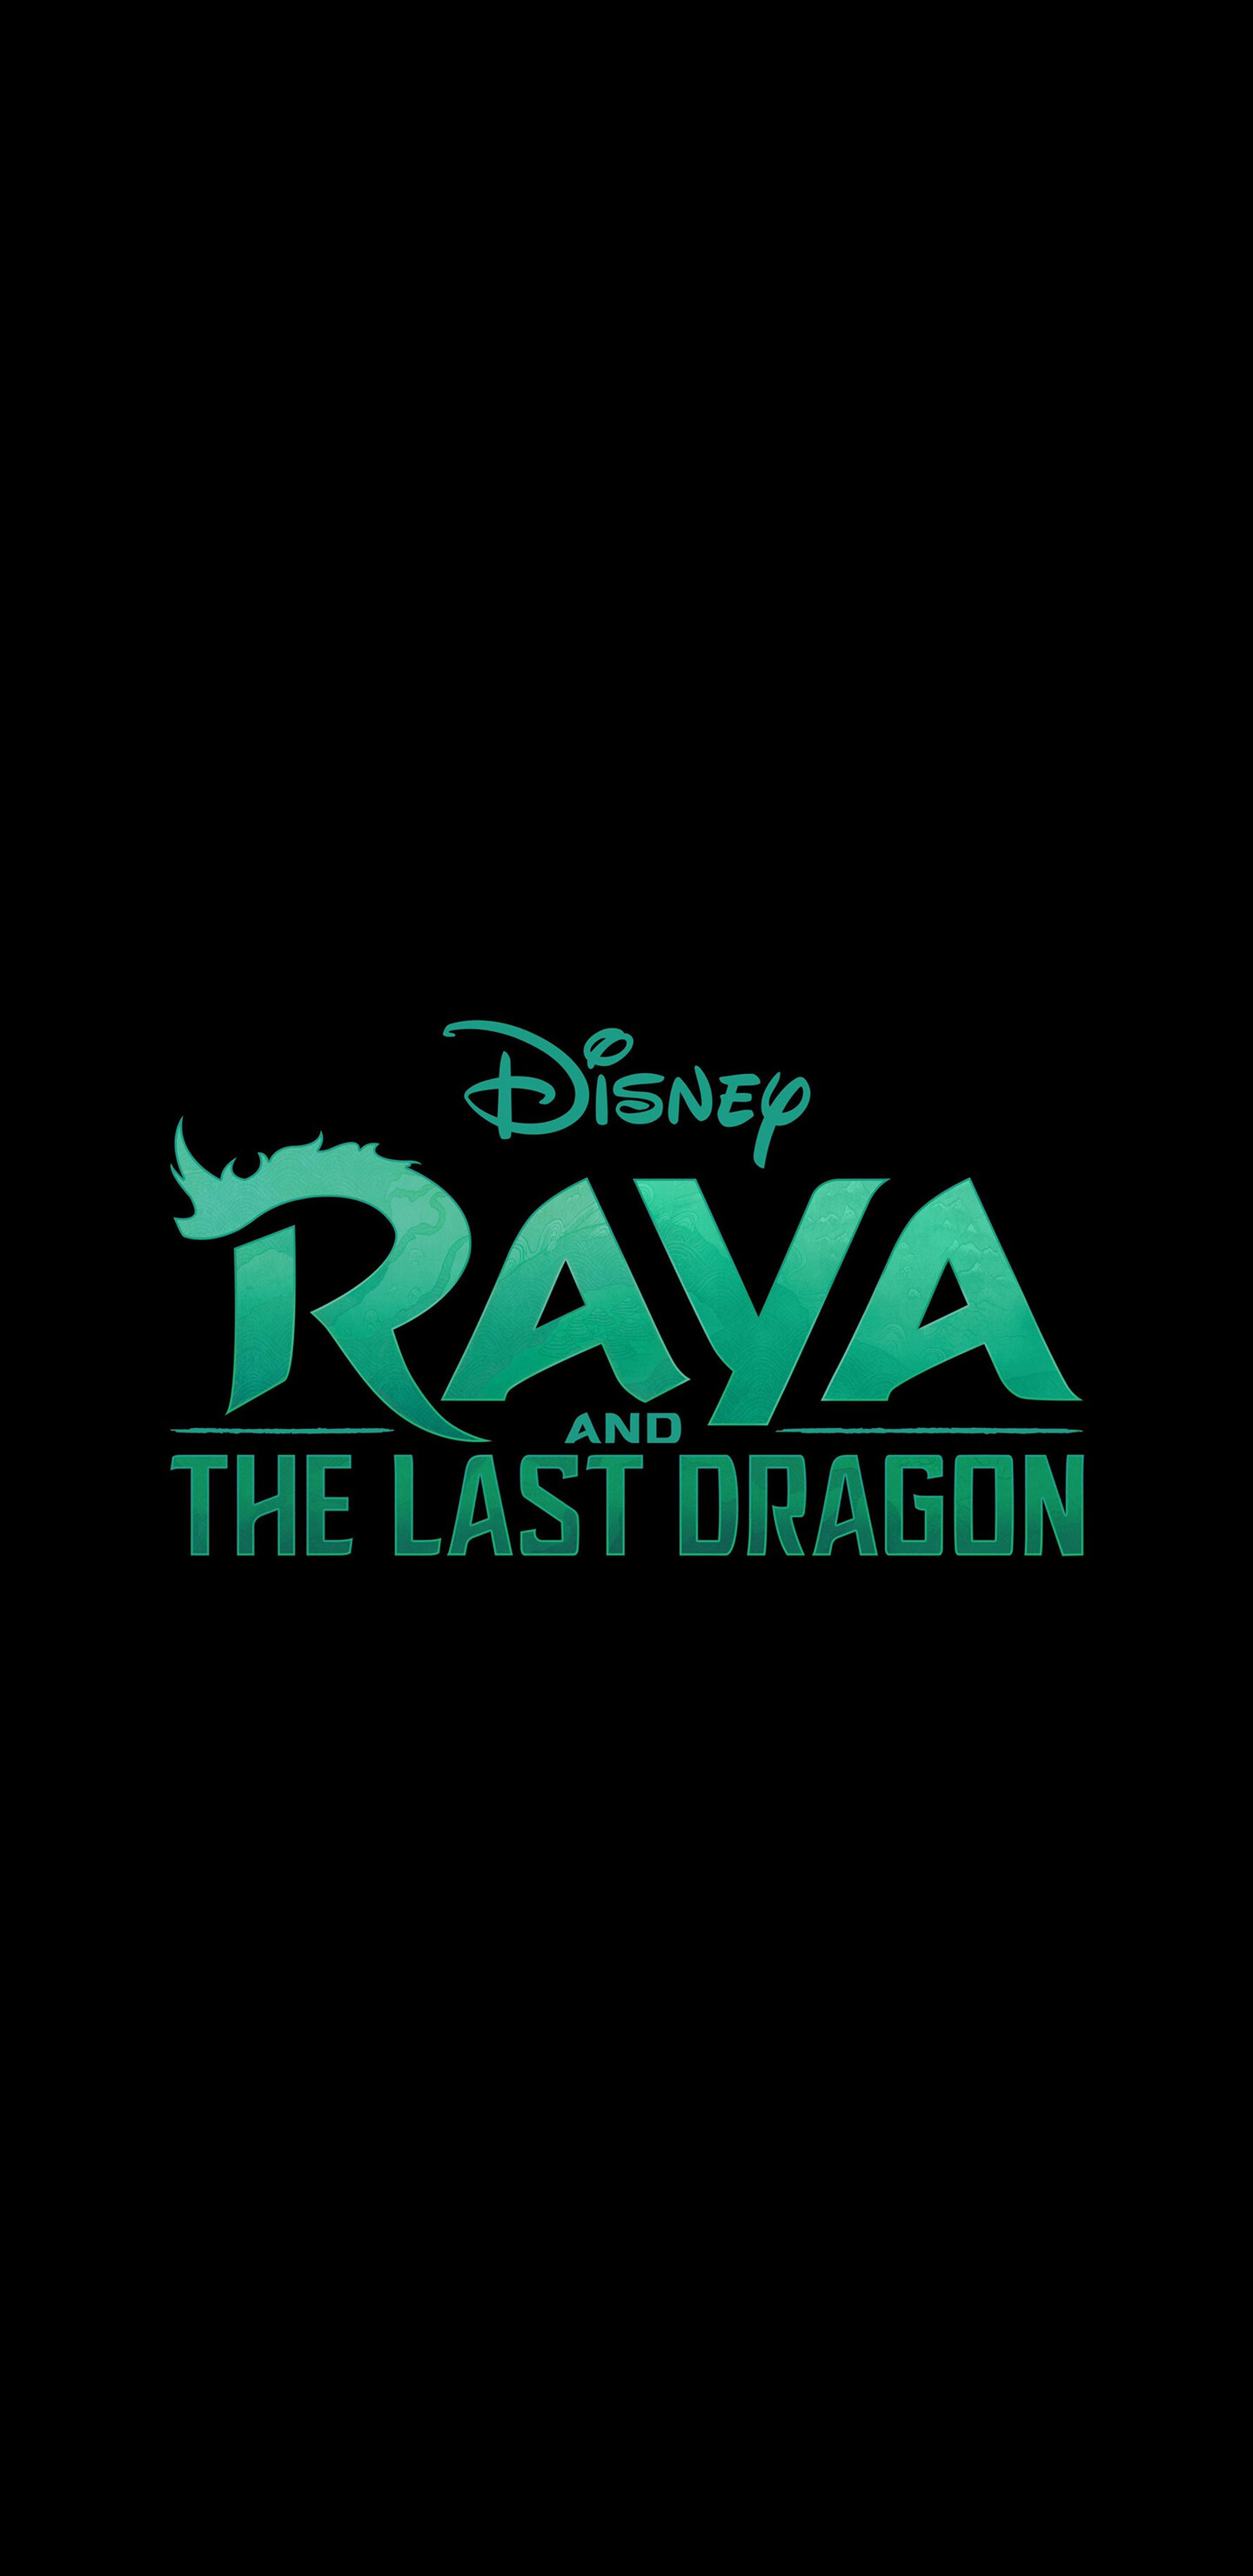 Raya and the Last Dragon: Disney animation, 2021 animated film, Movie. 1440x2960 HD Wallpaper.